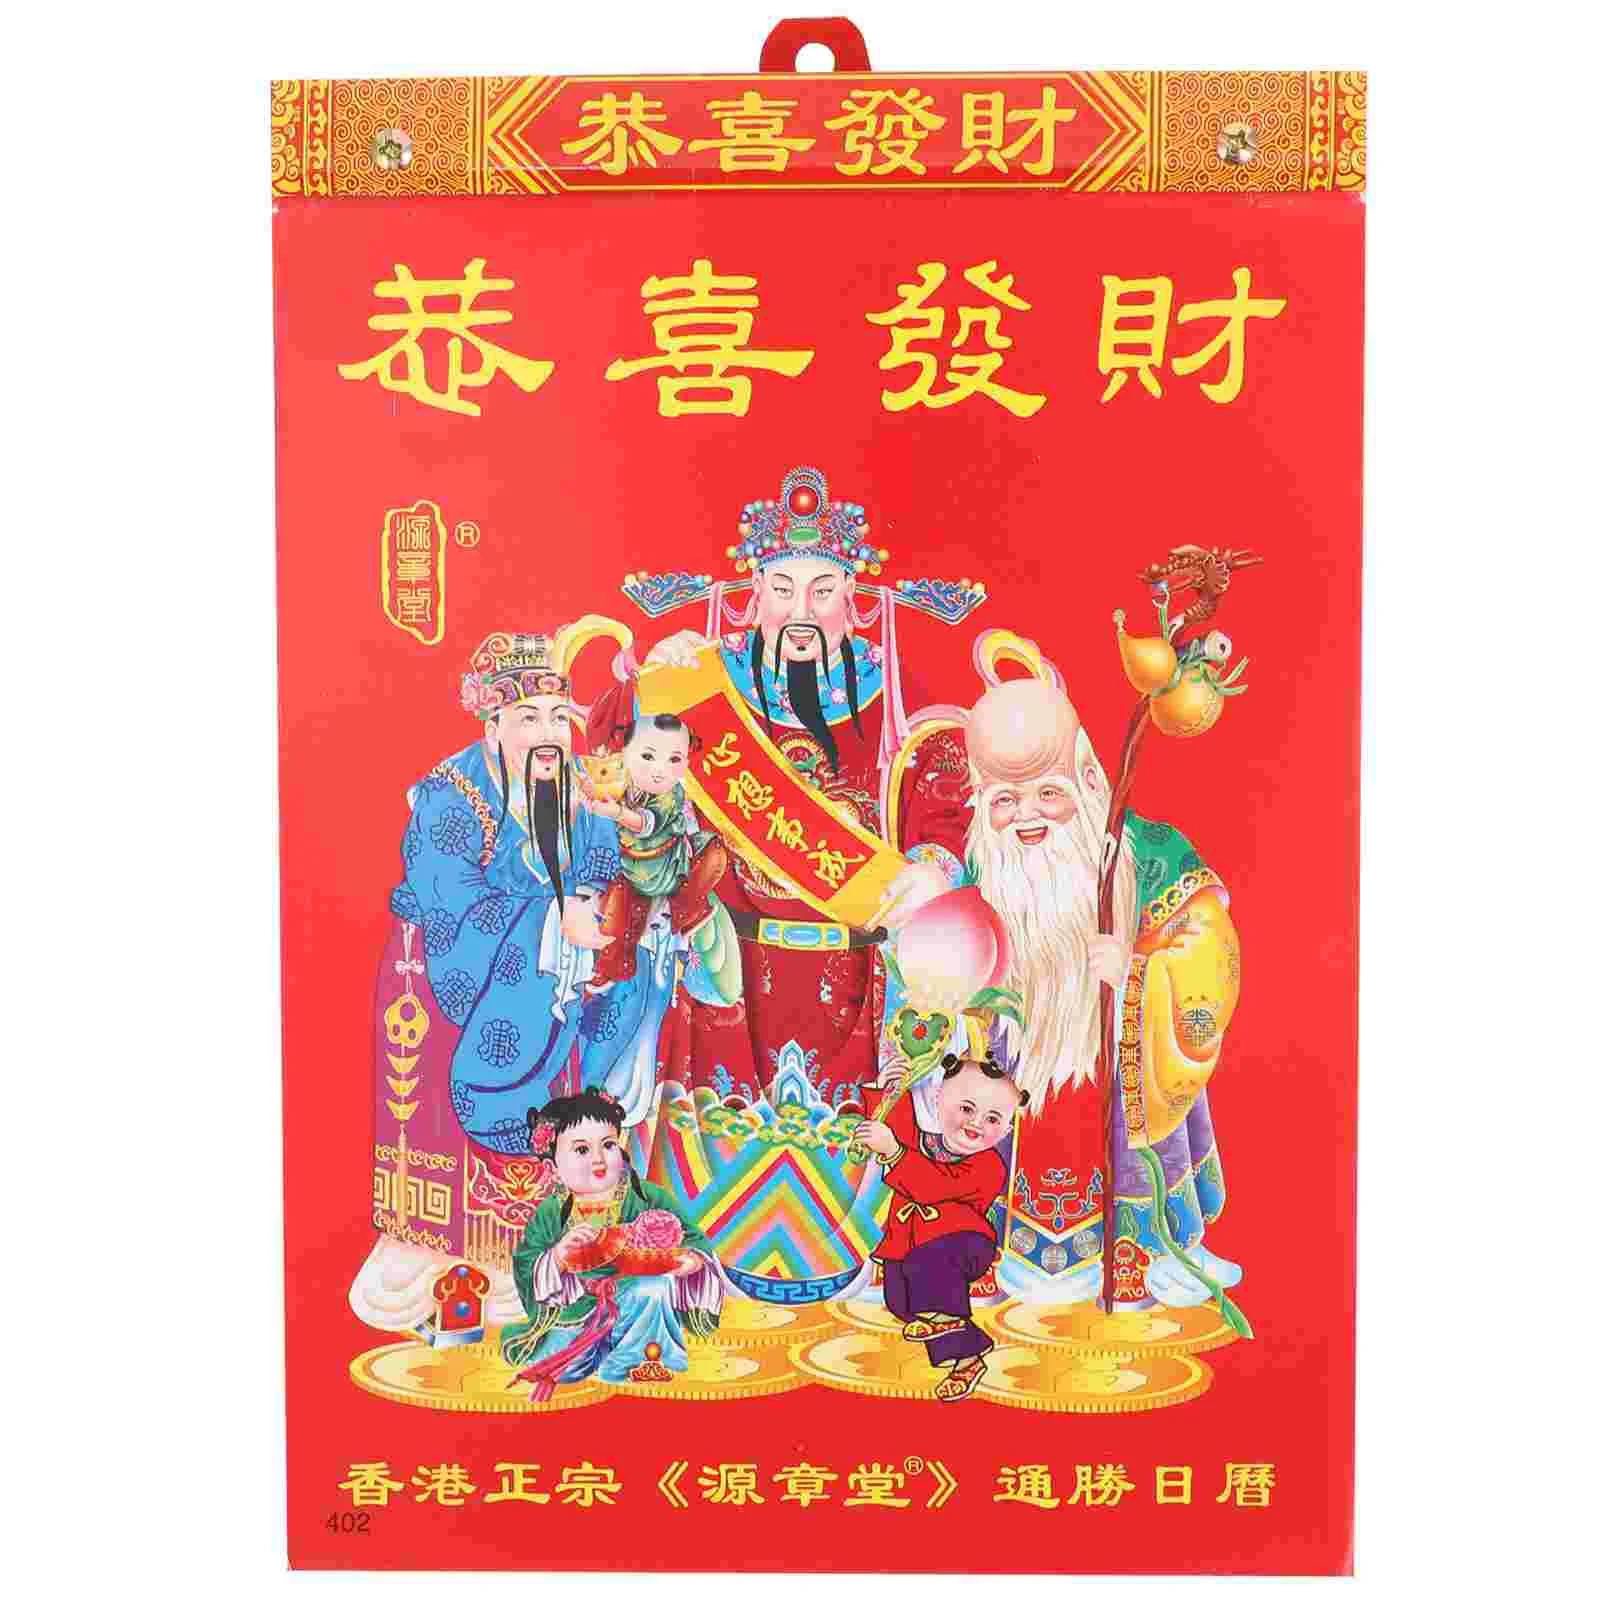 

Wall Calendar Traditional Calendar Tearable Chinese Lunar Calendar Year Of Dragon Calendars Home Office Supplies